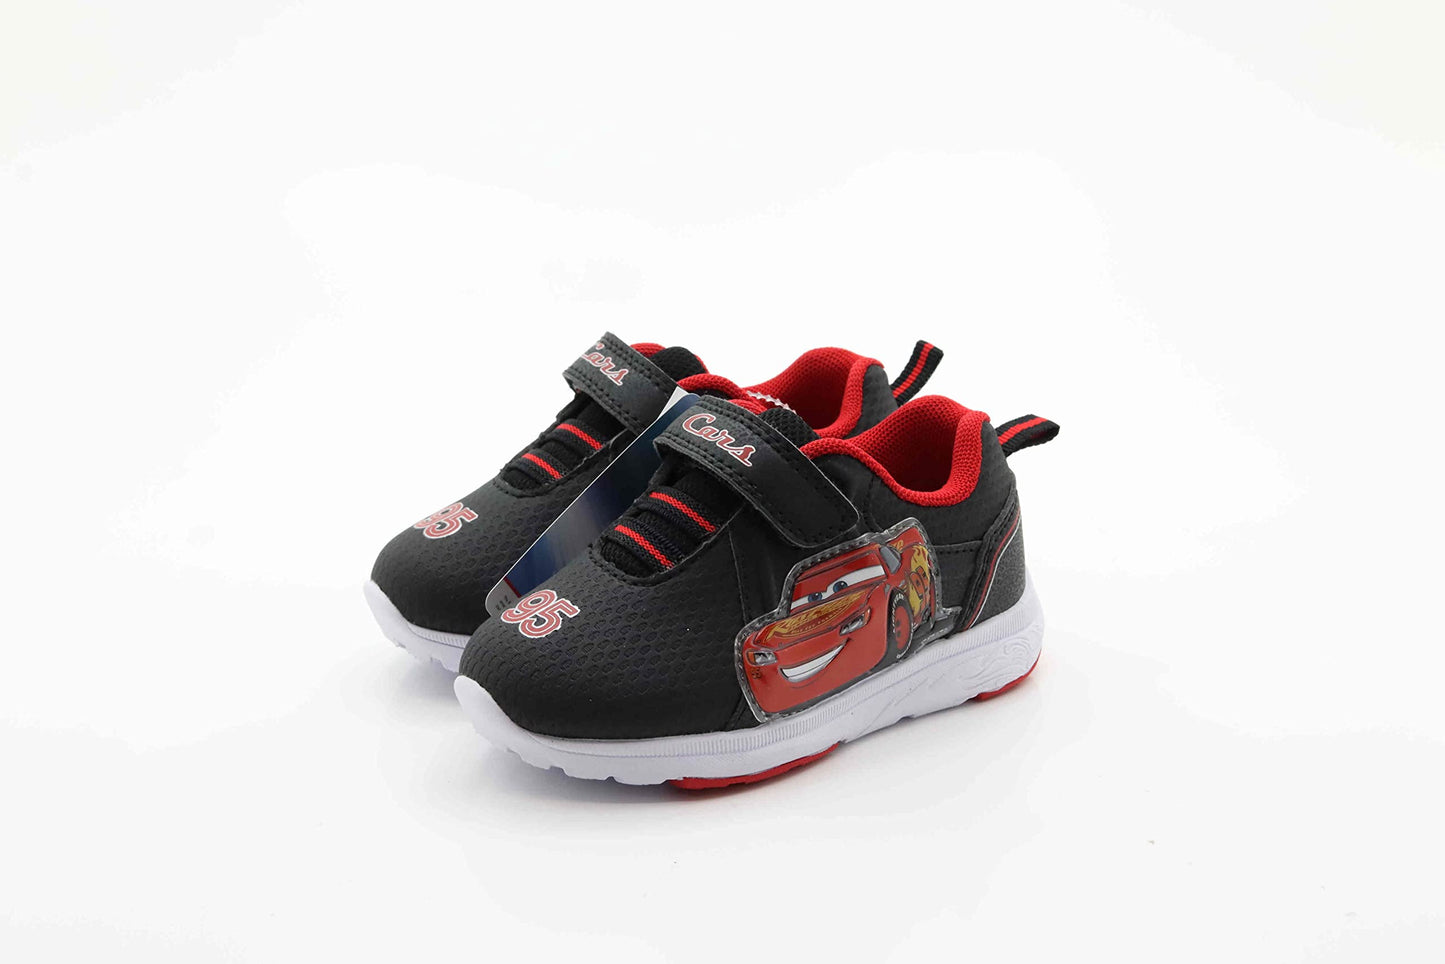 Disney Pixar Cars Boy's Lighted Athletic Sneaker, Black (Toddler/Little Kid)